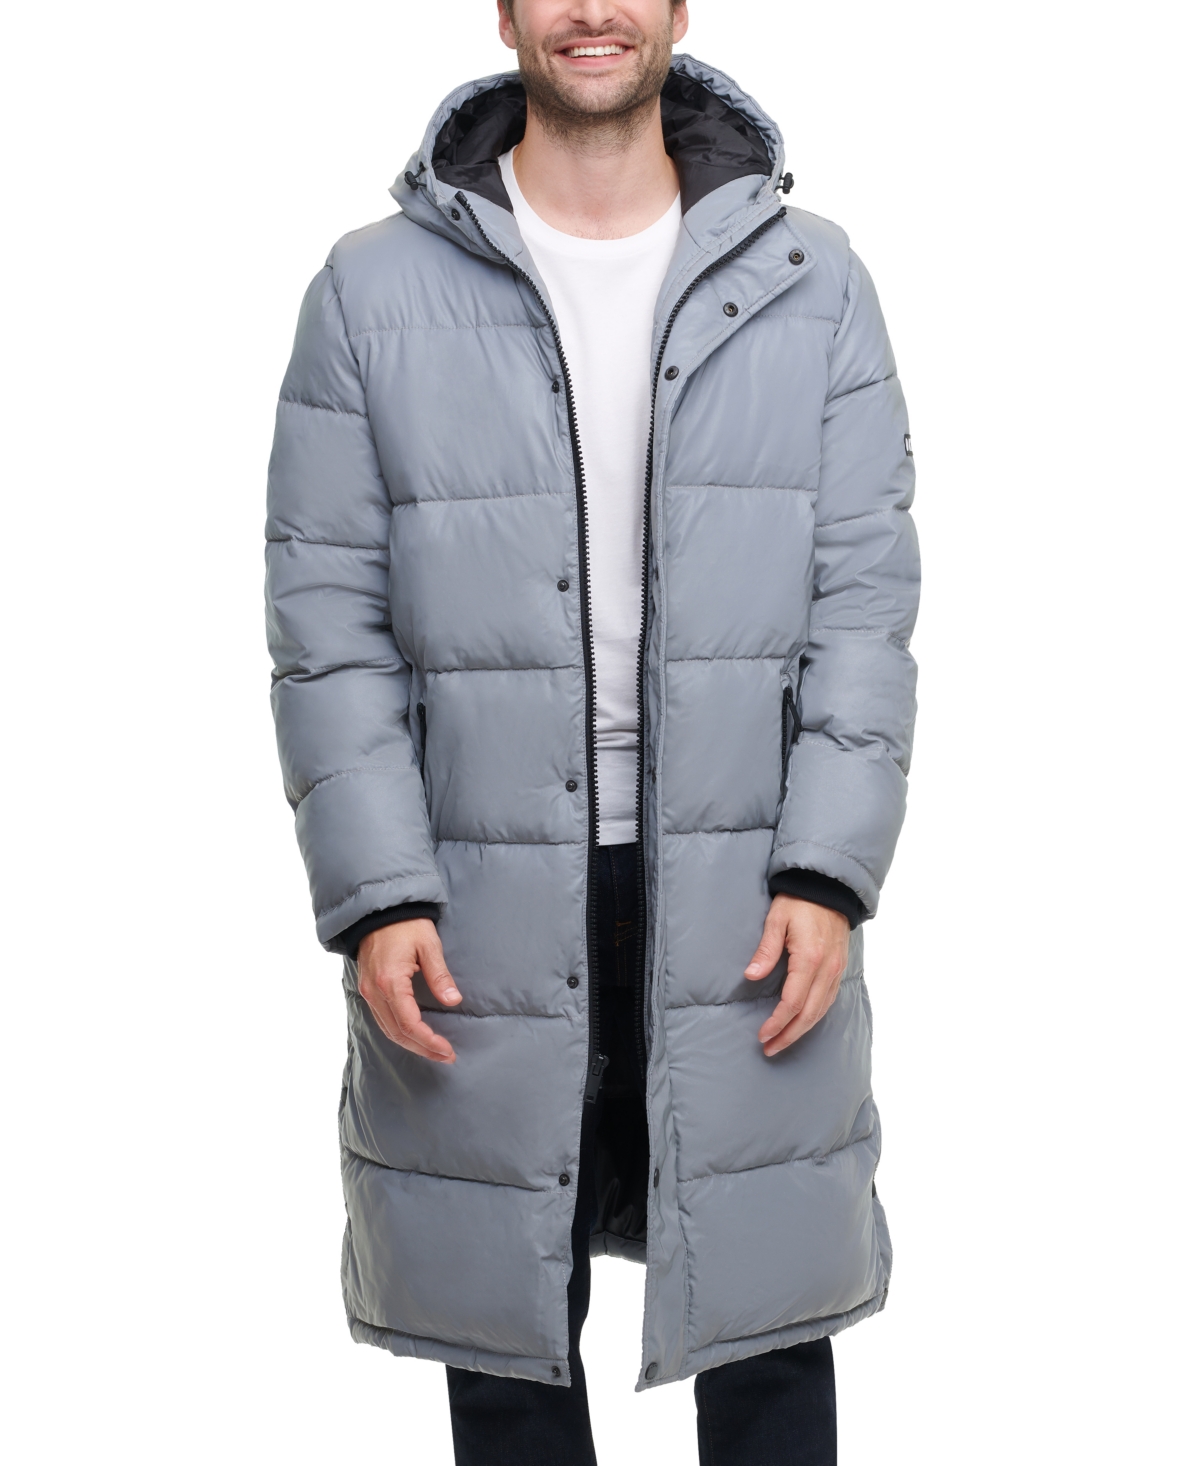 Long Hooded Parka Men's Jacket, Created for Macy's - Reflective